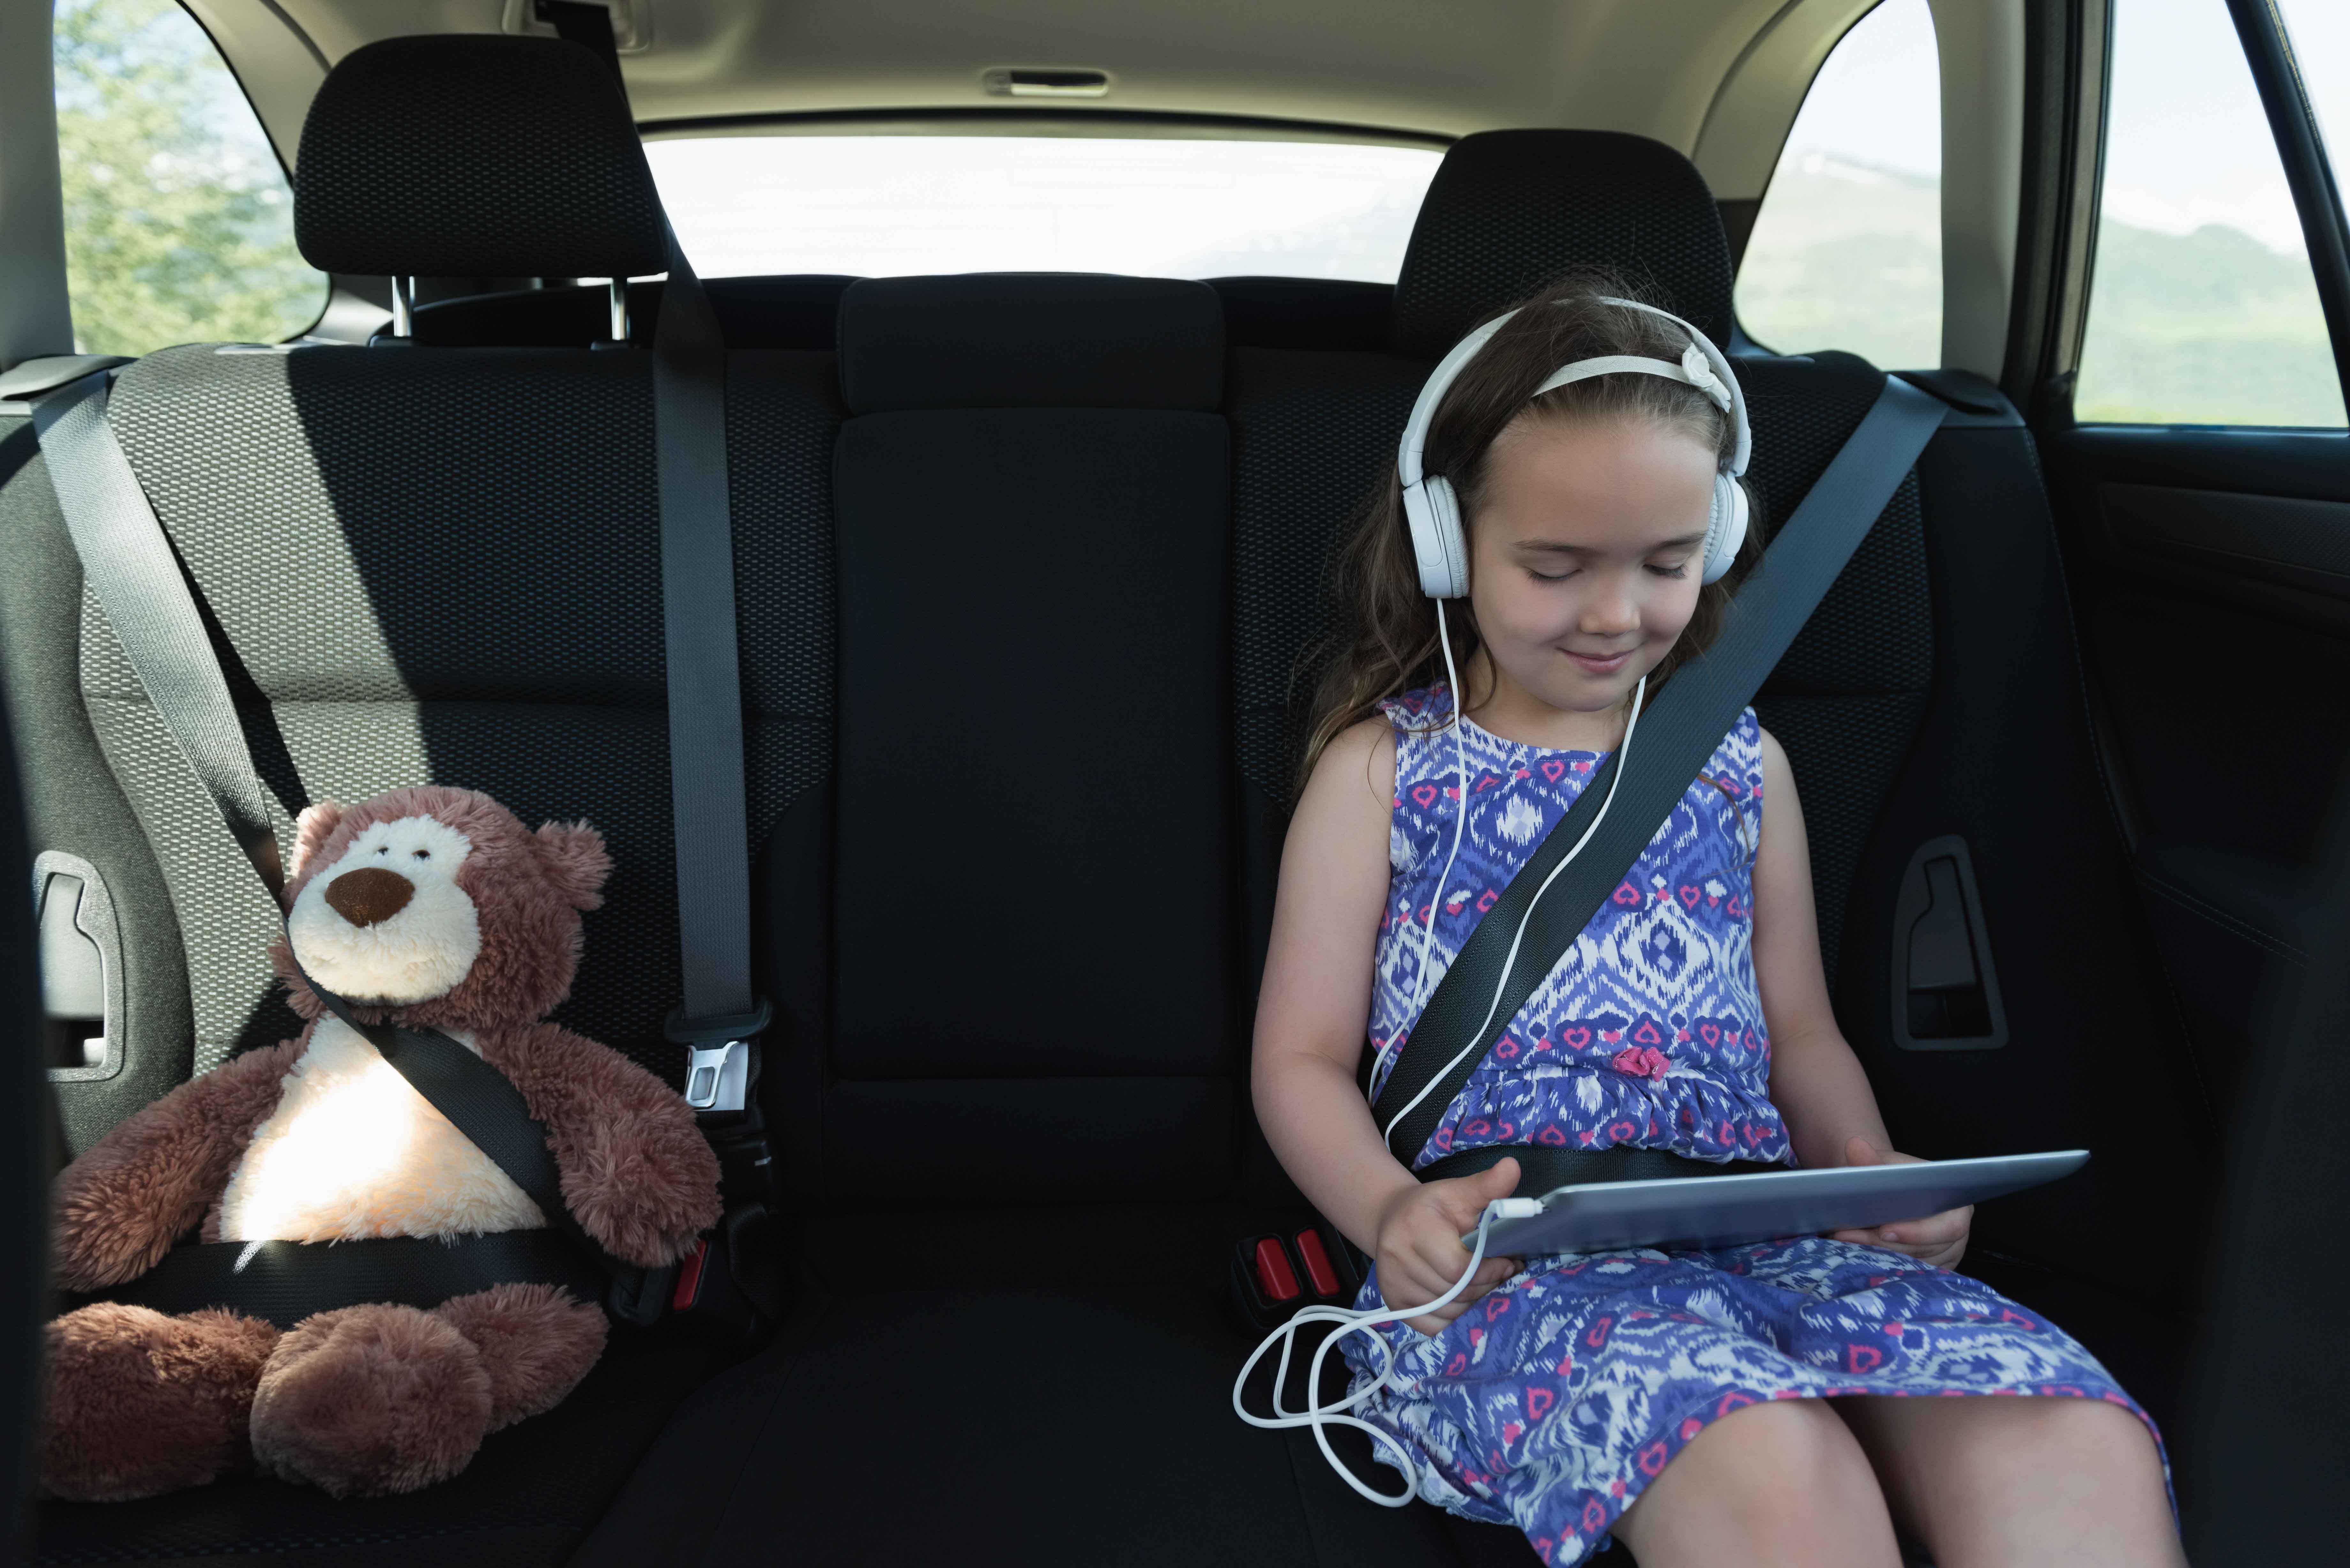 seatbelt listening music on headphone from digital tablet